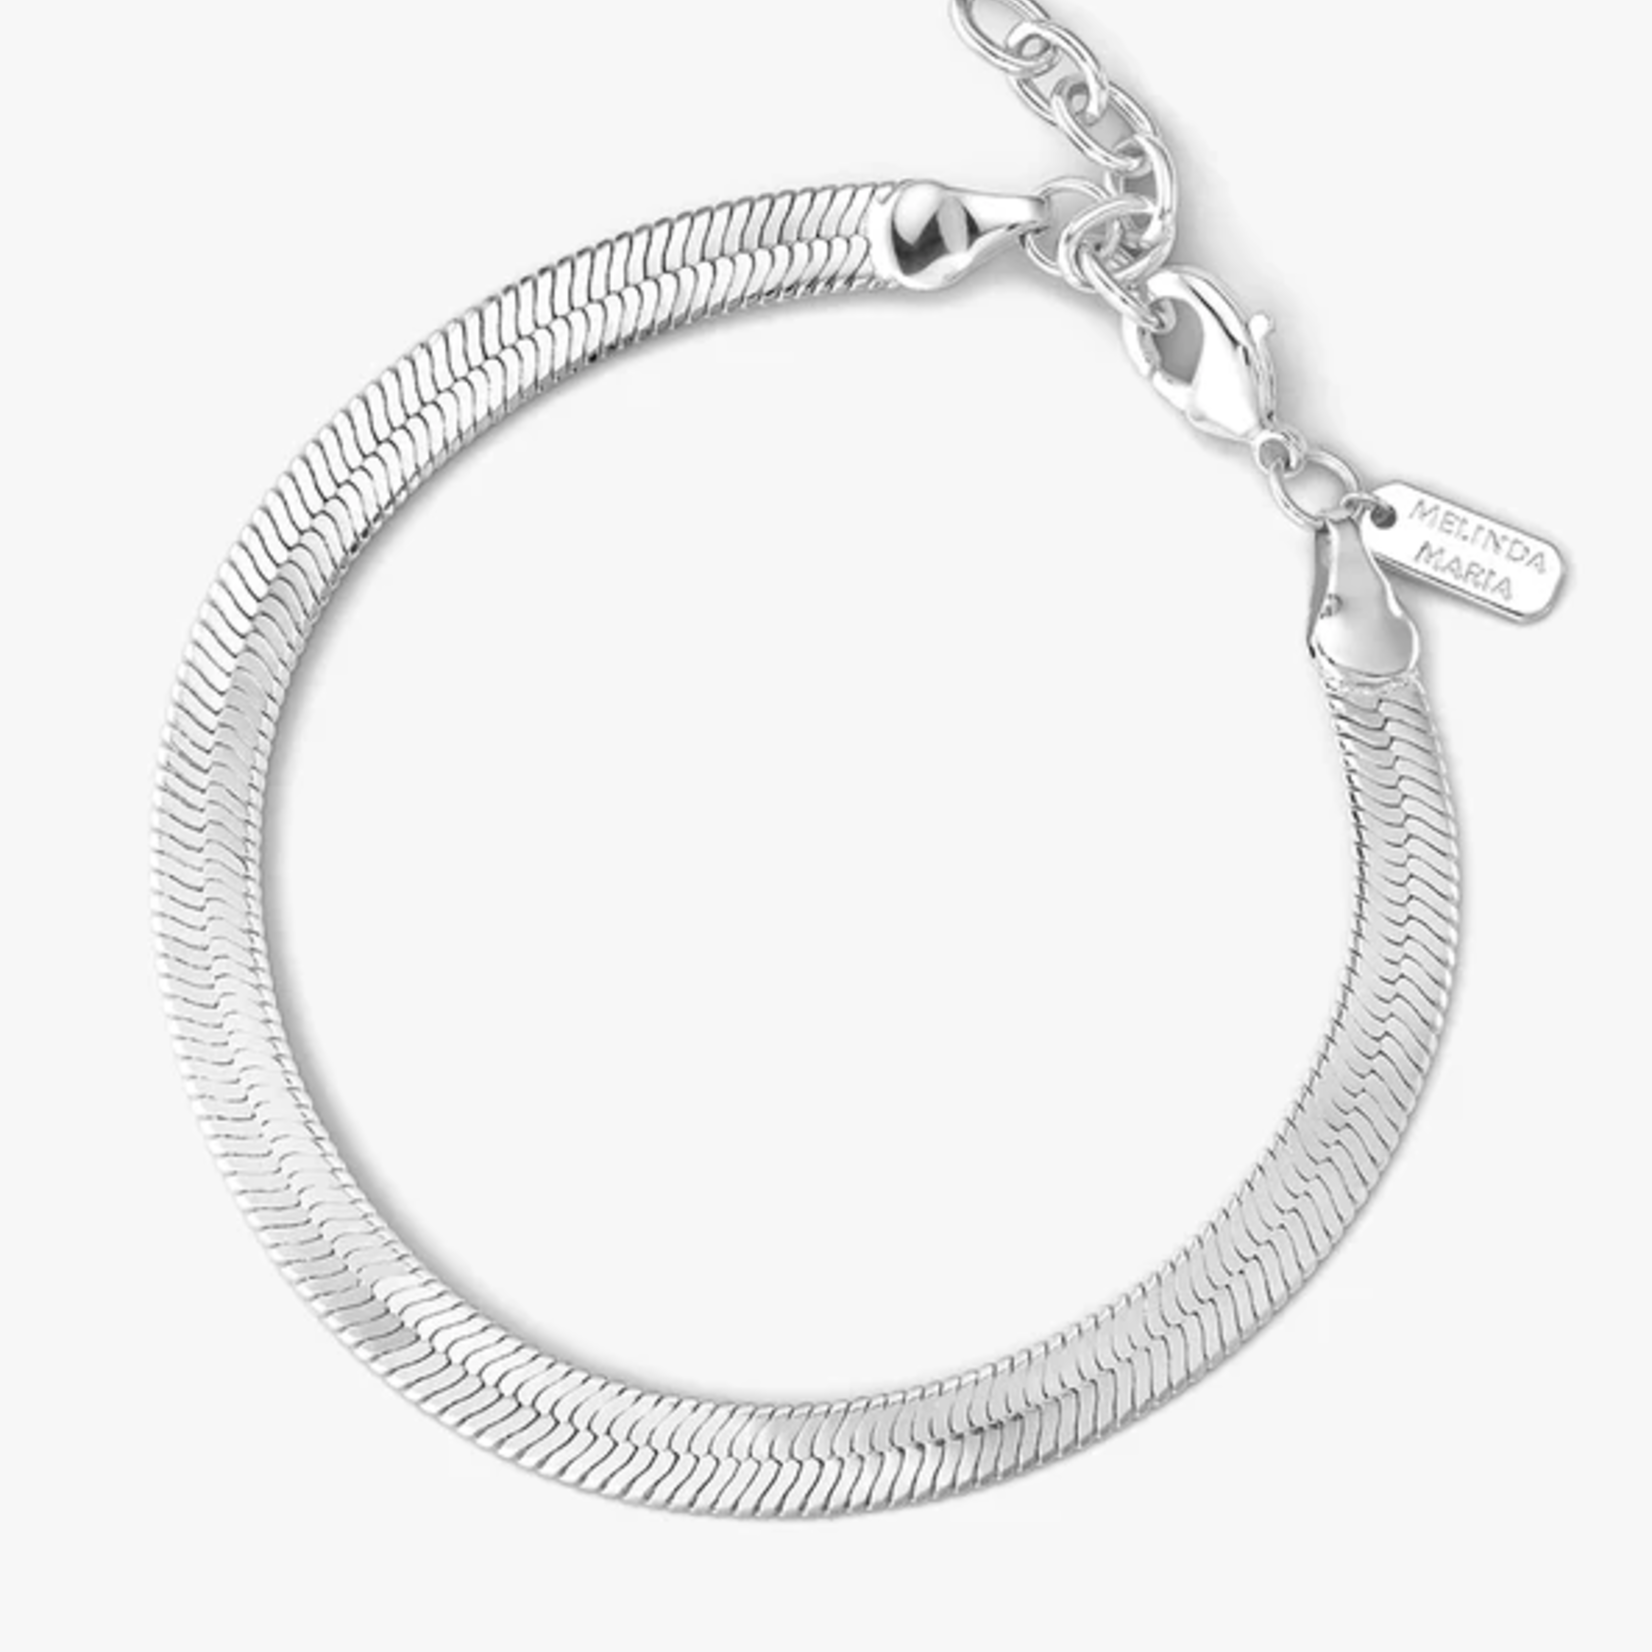 Herringbone Bracelet - Silver Plated over Brass